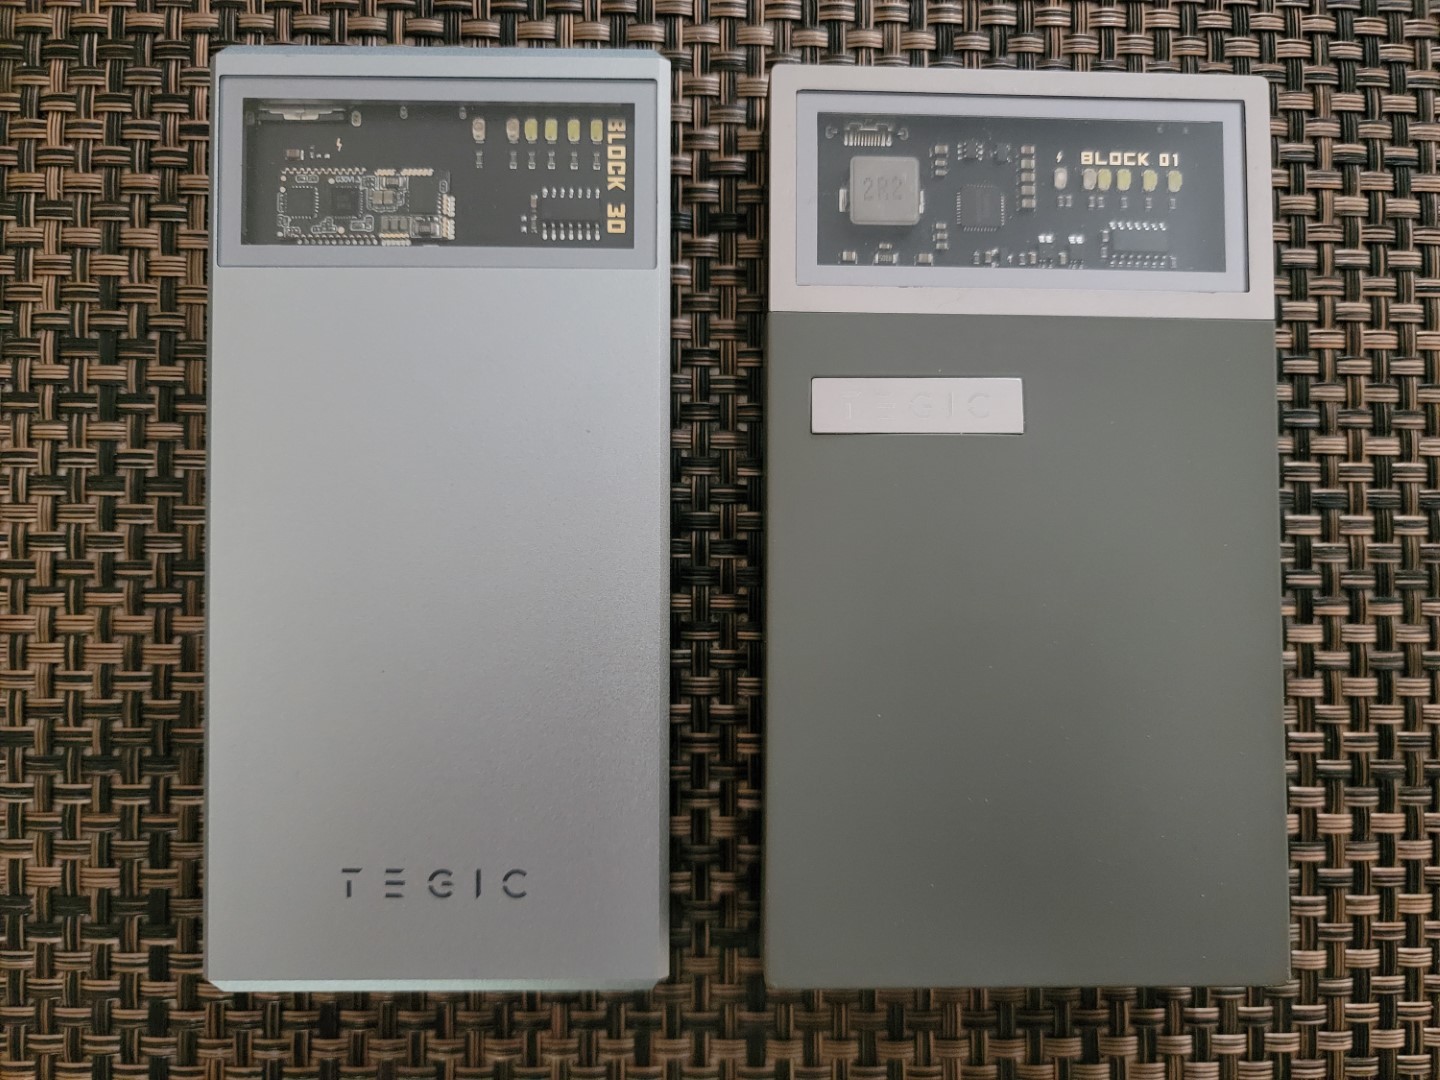 TEGIC Block 30 compared with the TEGIC Block 01 2 - Front